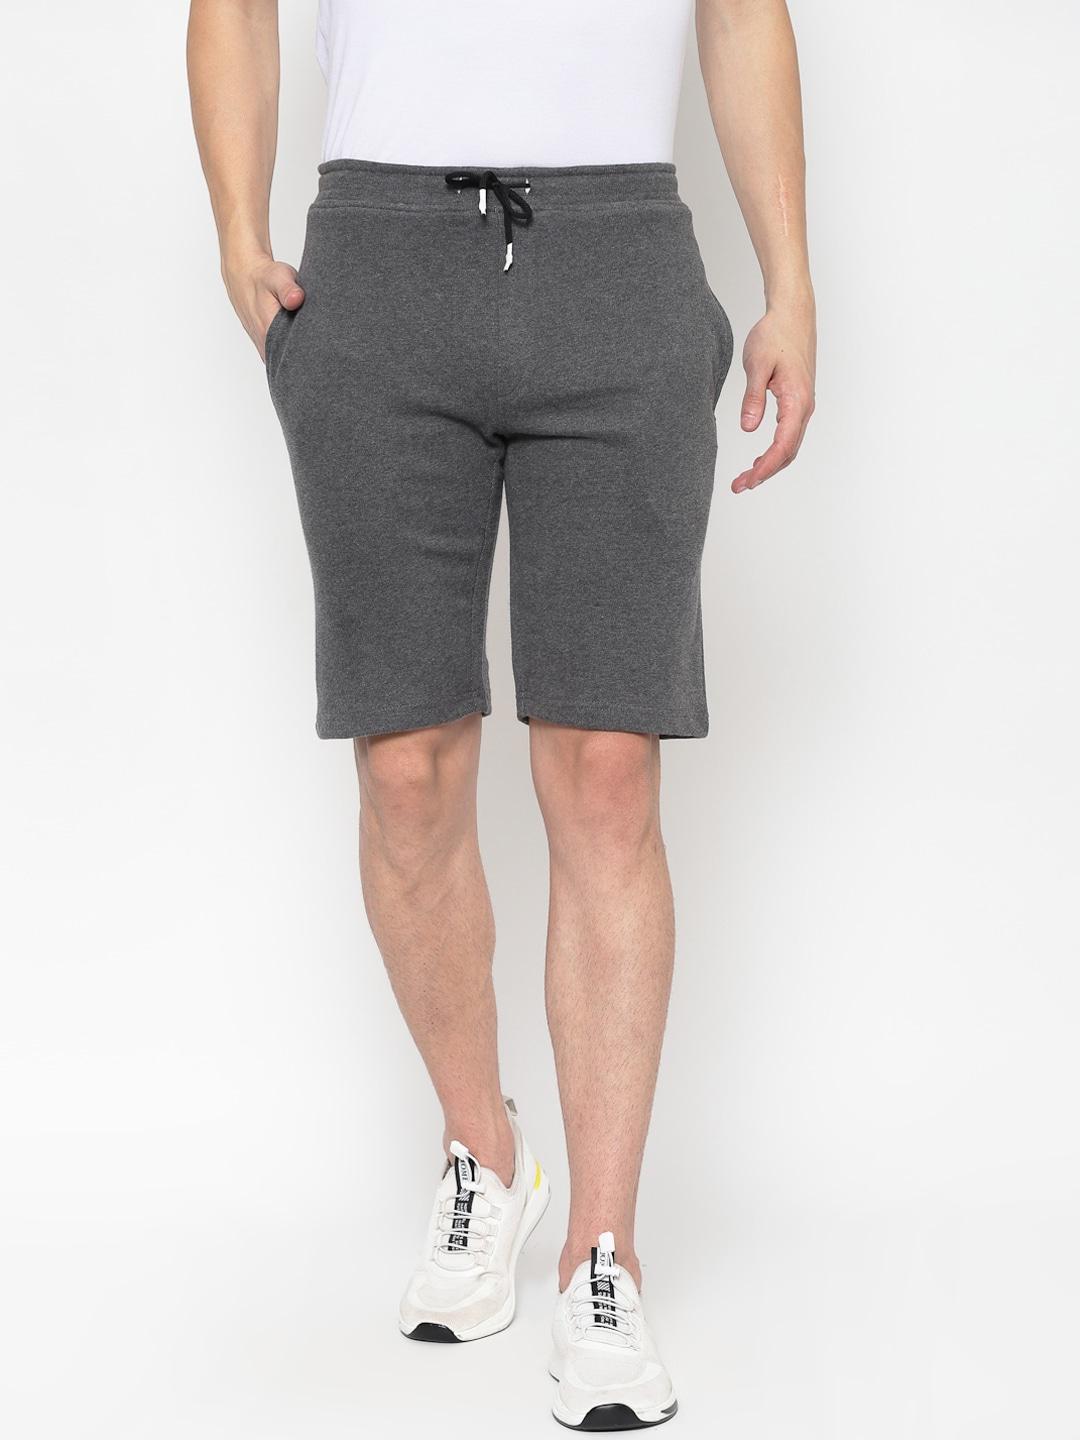 pause-sport-men-grey-melange-slim-fit-mid-rise-sports-shorts